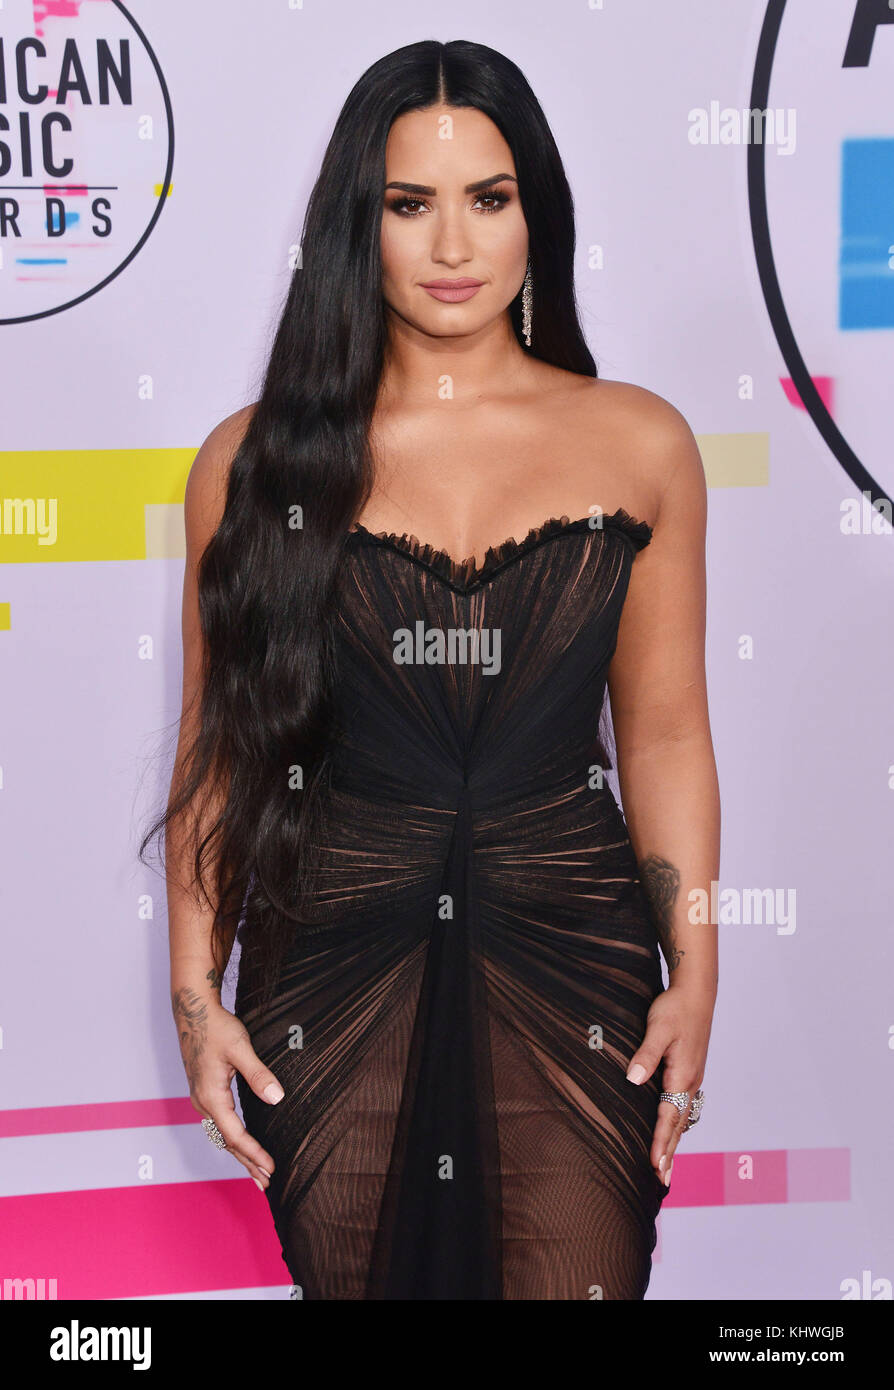 Los Angeles, USA. 19 Nov, 2017. Demi Lovato 056 kommt an der 2017 American Music Awards bei Microsoft Theater am 19. November 2017 in Los Angeles, Kalifornien Quelle: tsuni/usa/alamy leben Nachrichten Stockfoto